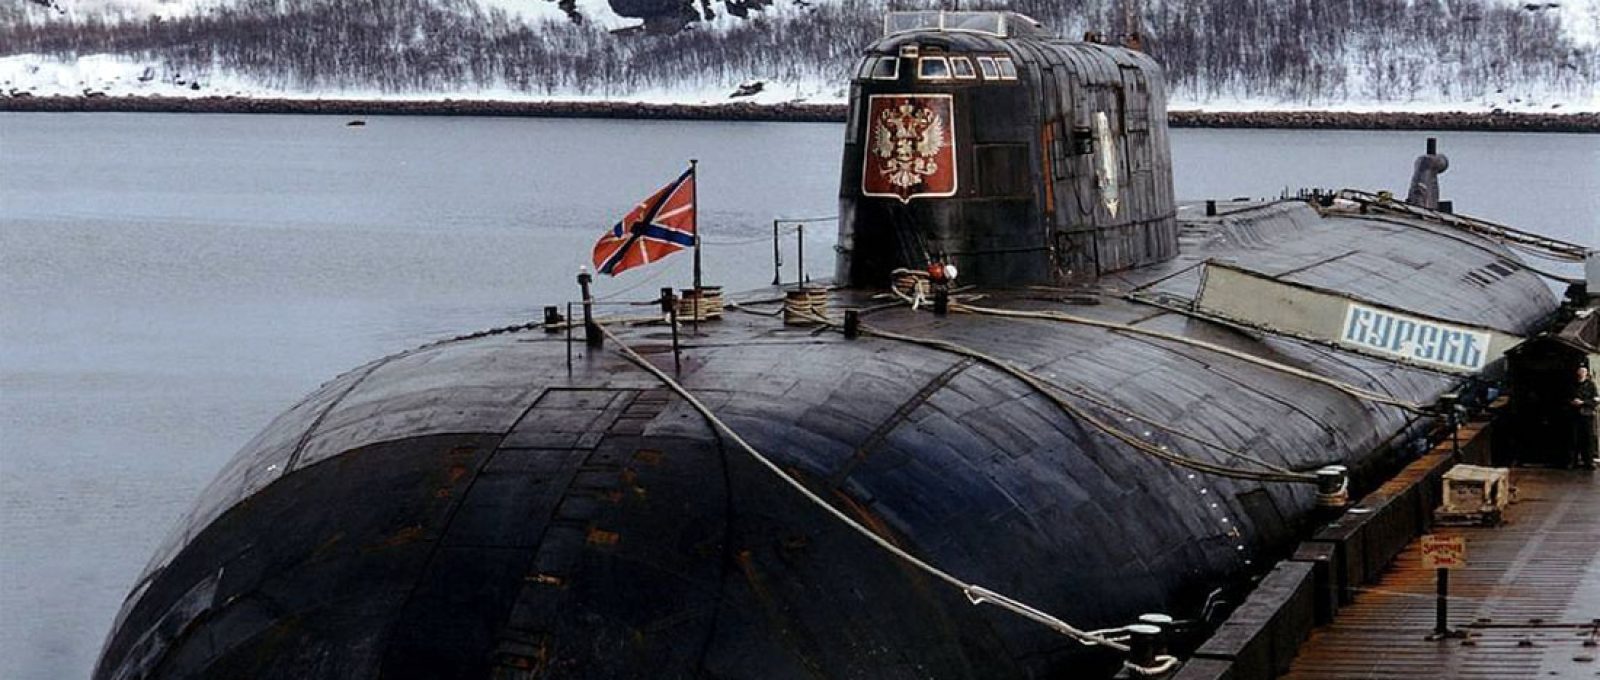 O submarino nuclear russo Kursk em 1999 (Alexander Raube/TASS).